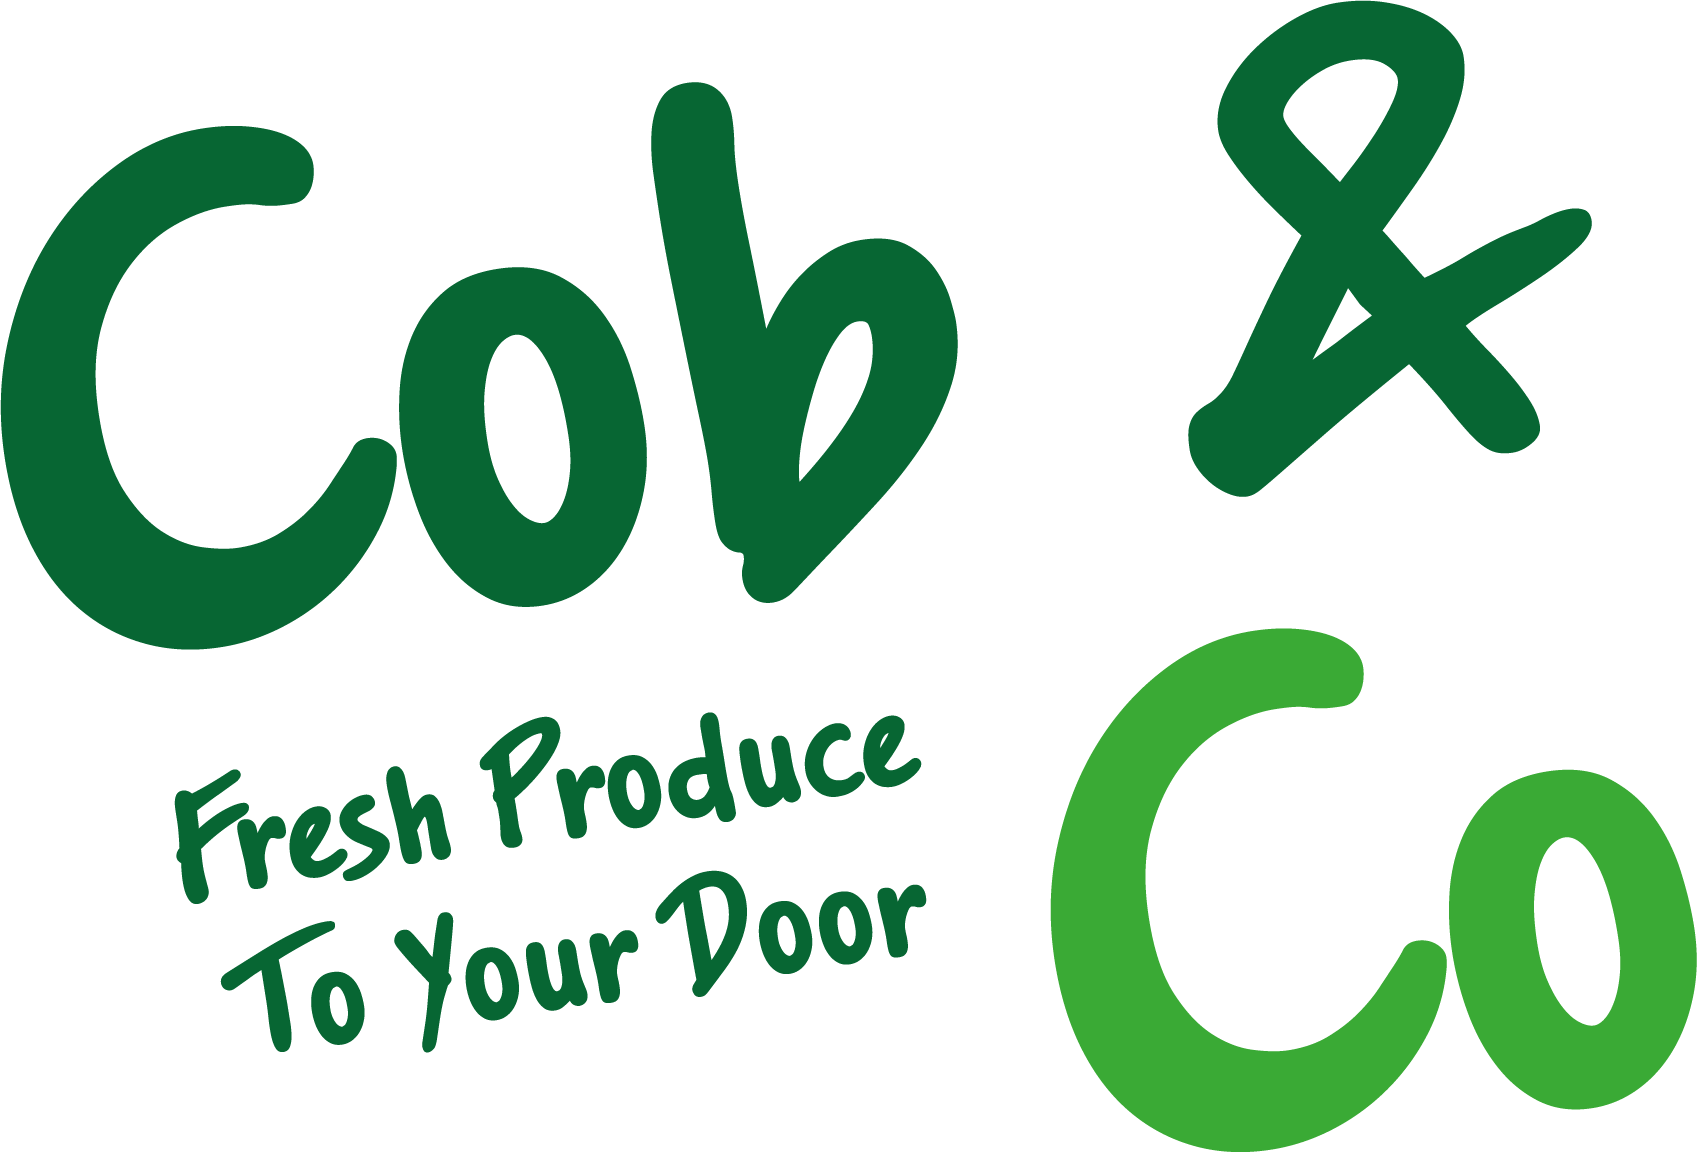 Cob & Co – Fresh Produce To Your Door